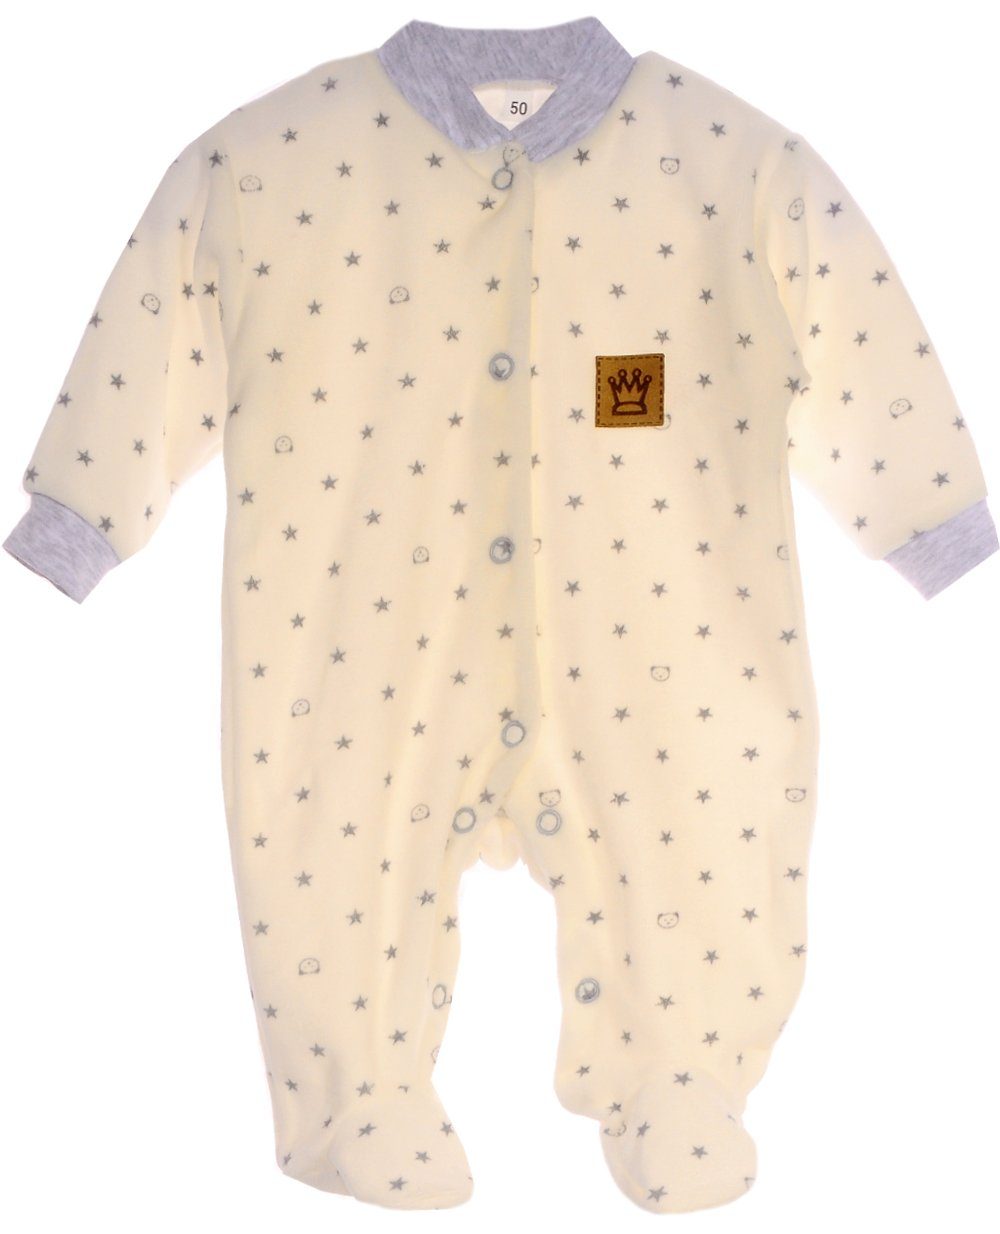 La Bortini Strampler Strampler Overall Baby Anzug Schlafanzug Einteiler